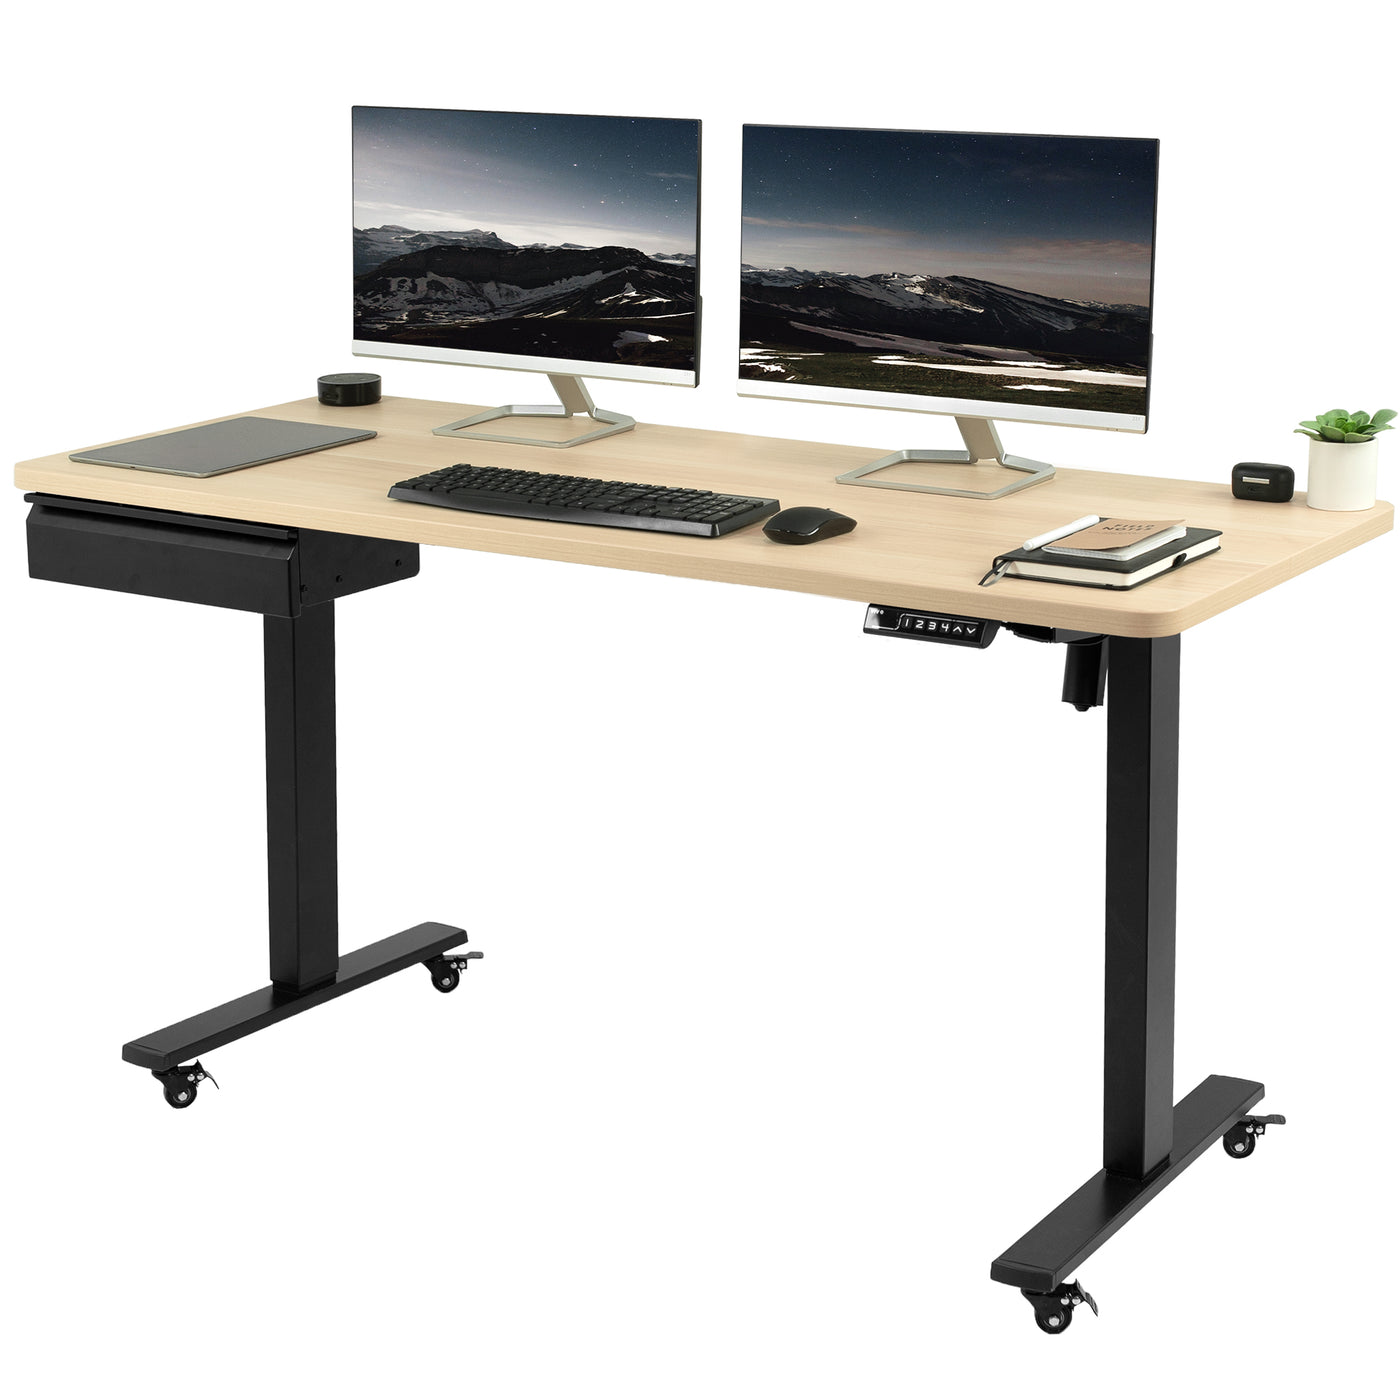 Light wood desk top with electric black height adjustable frame.